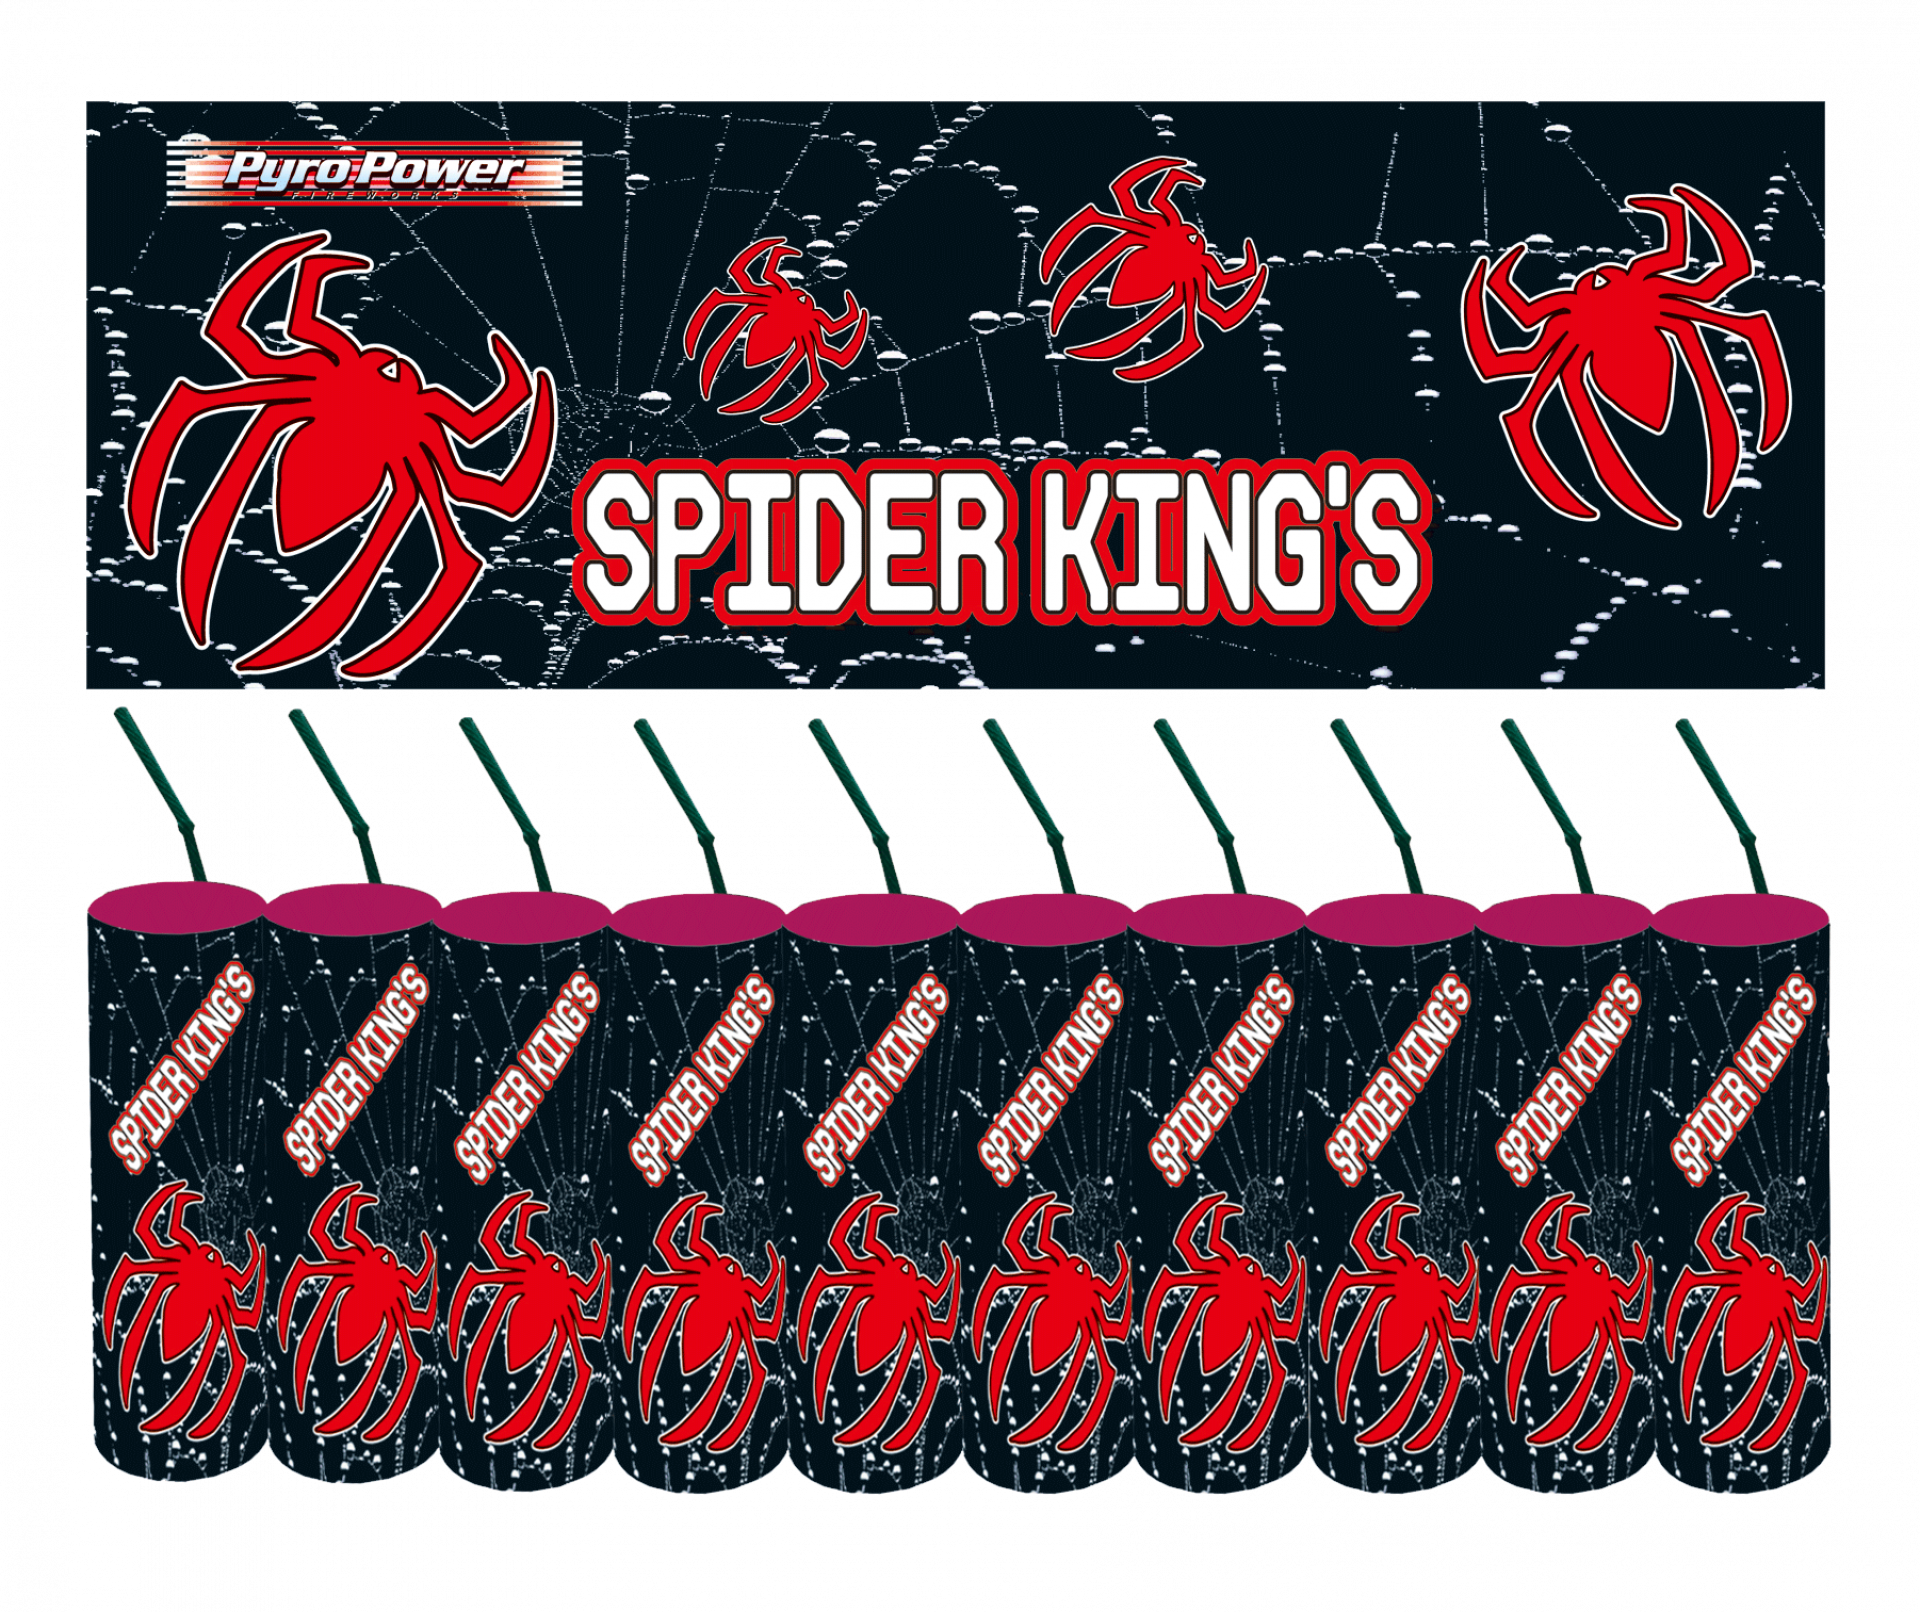 SPIDER KINGS